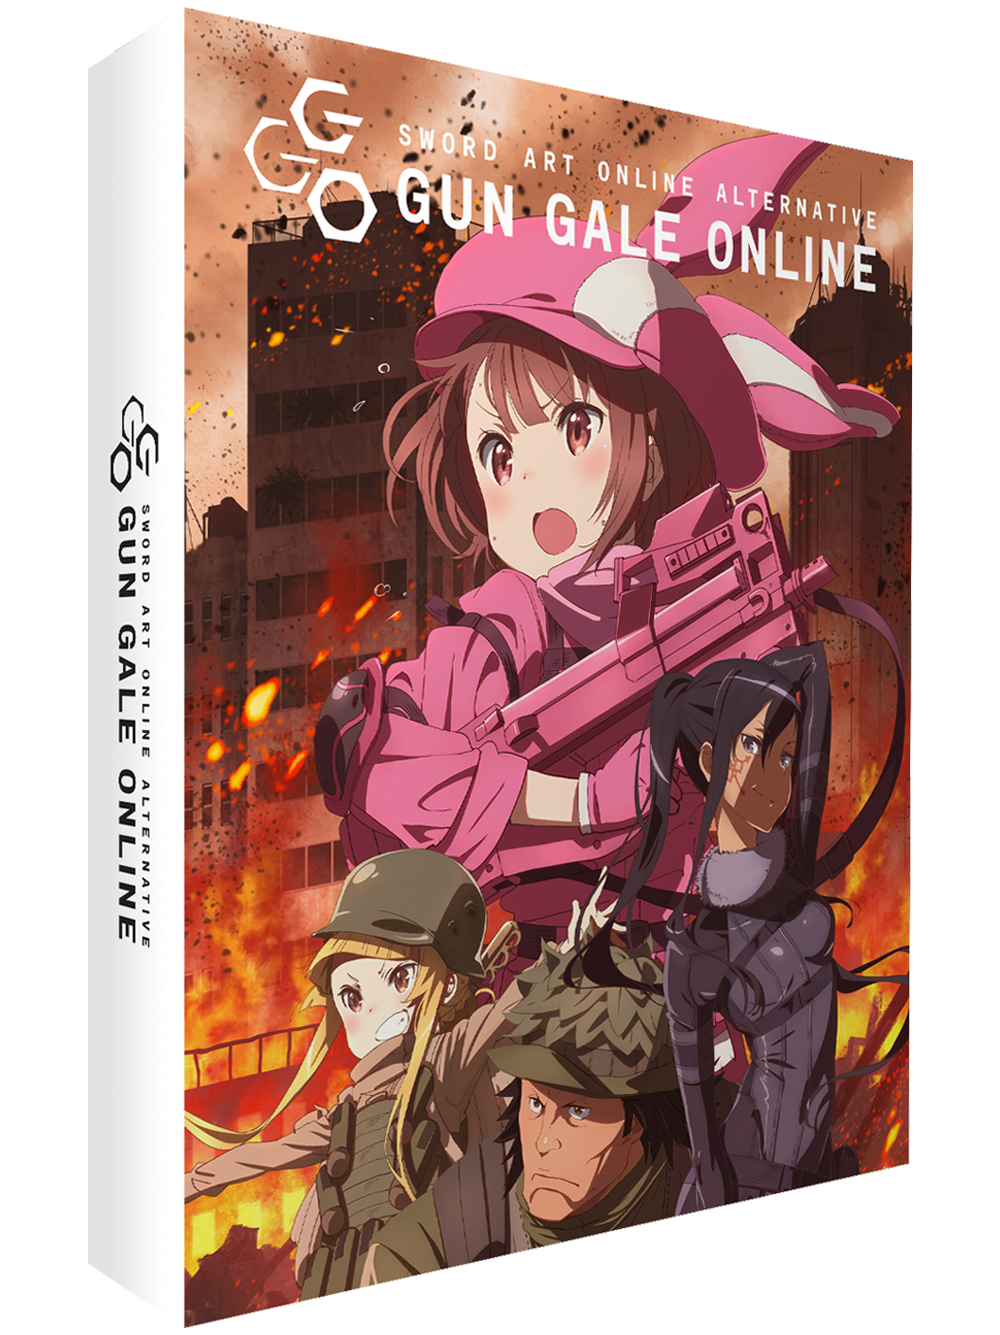 Sword Art Online Alternative: Gun Gale Online Season 2 Plans Revealed -  Crunchyroll News